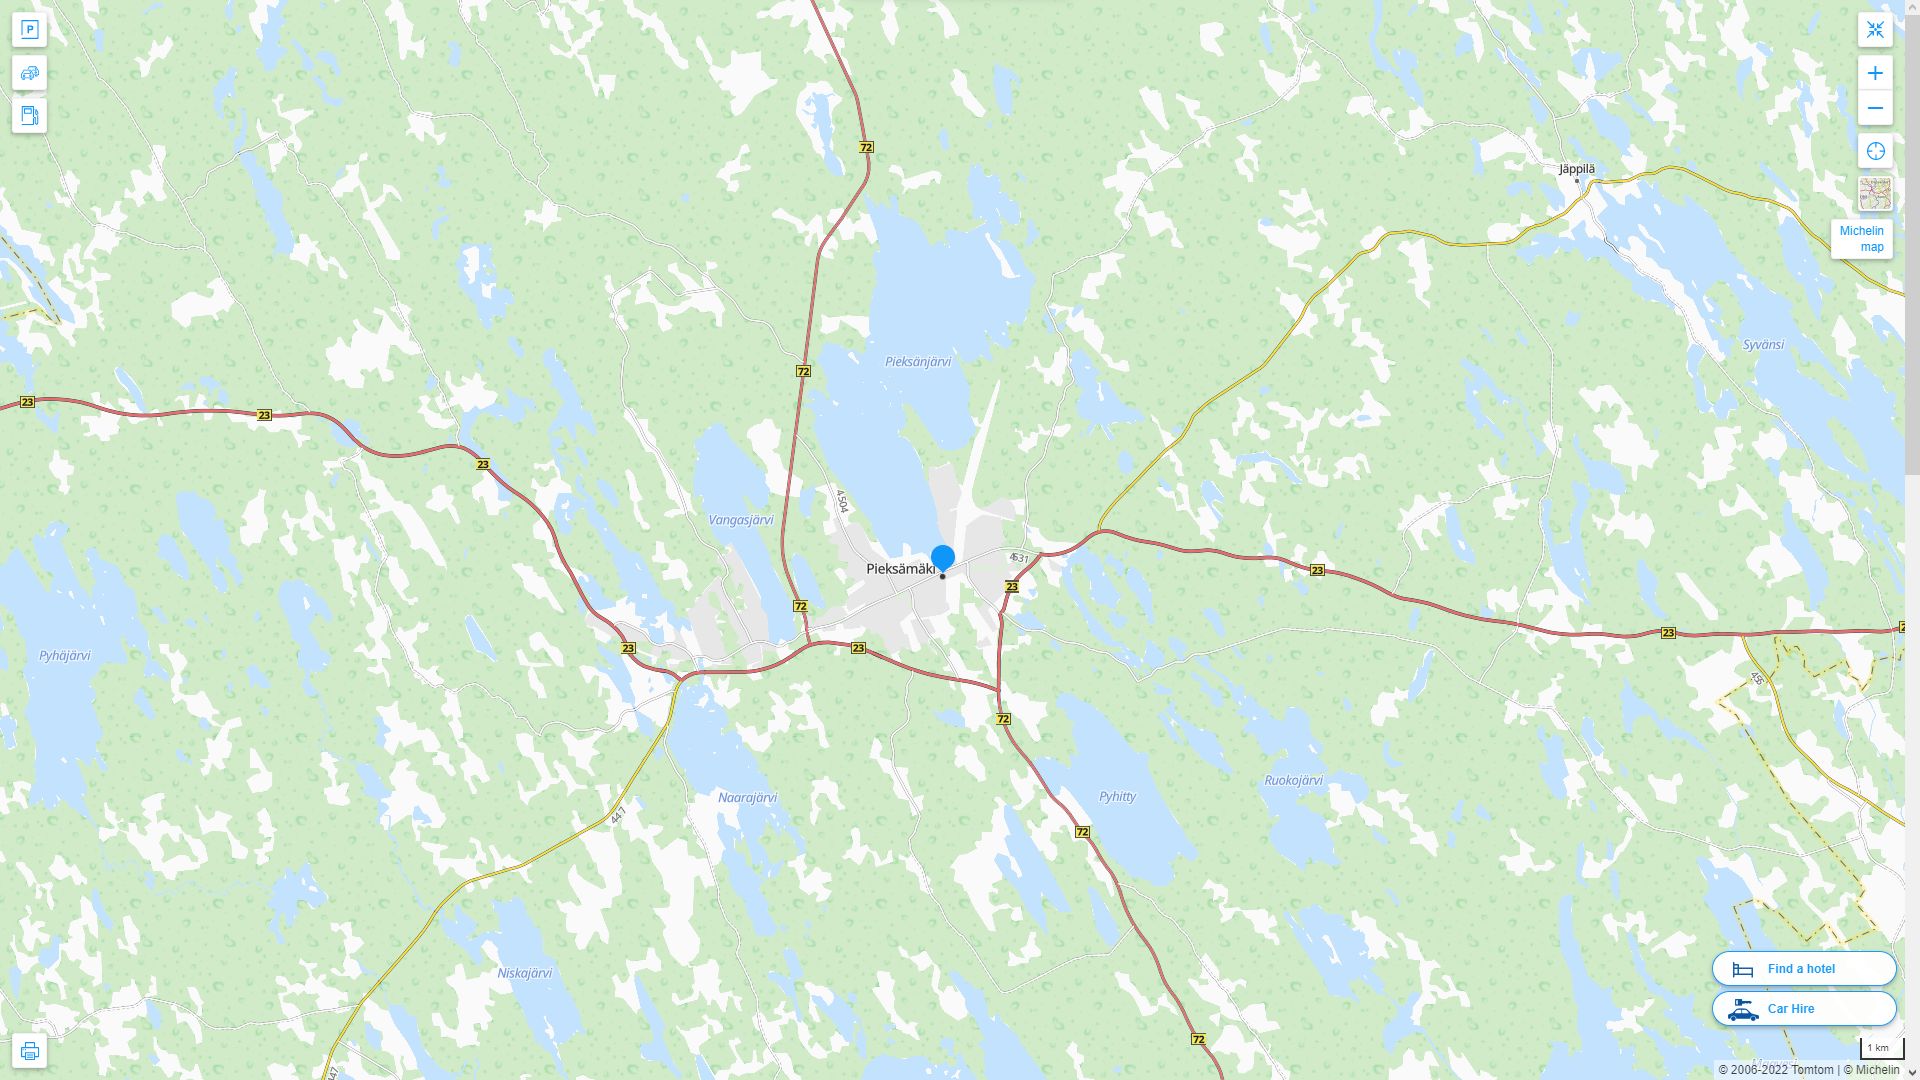 Pieksamaki Highway and Road Map